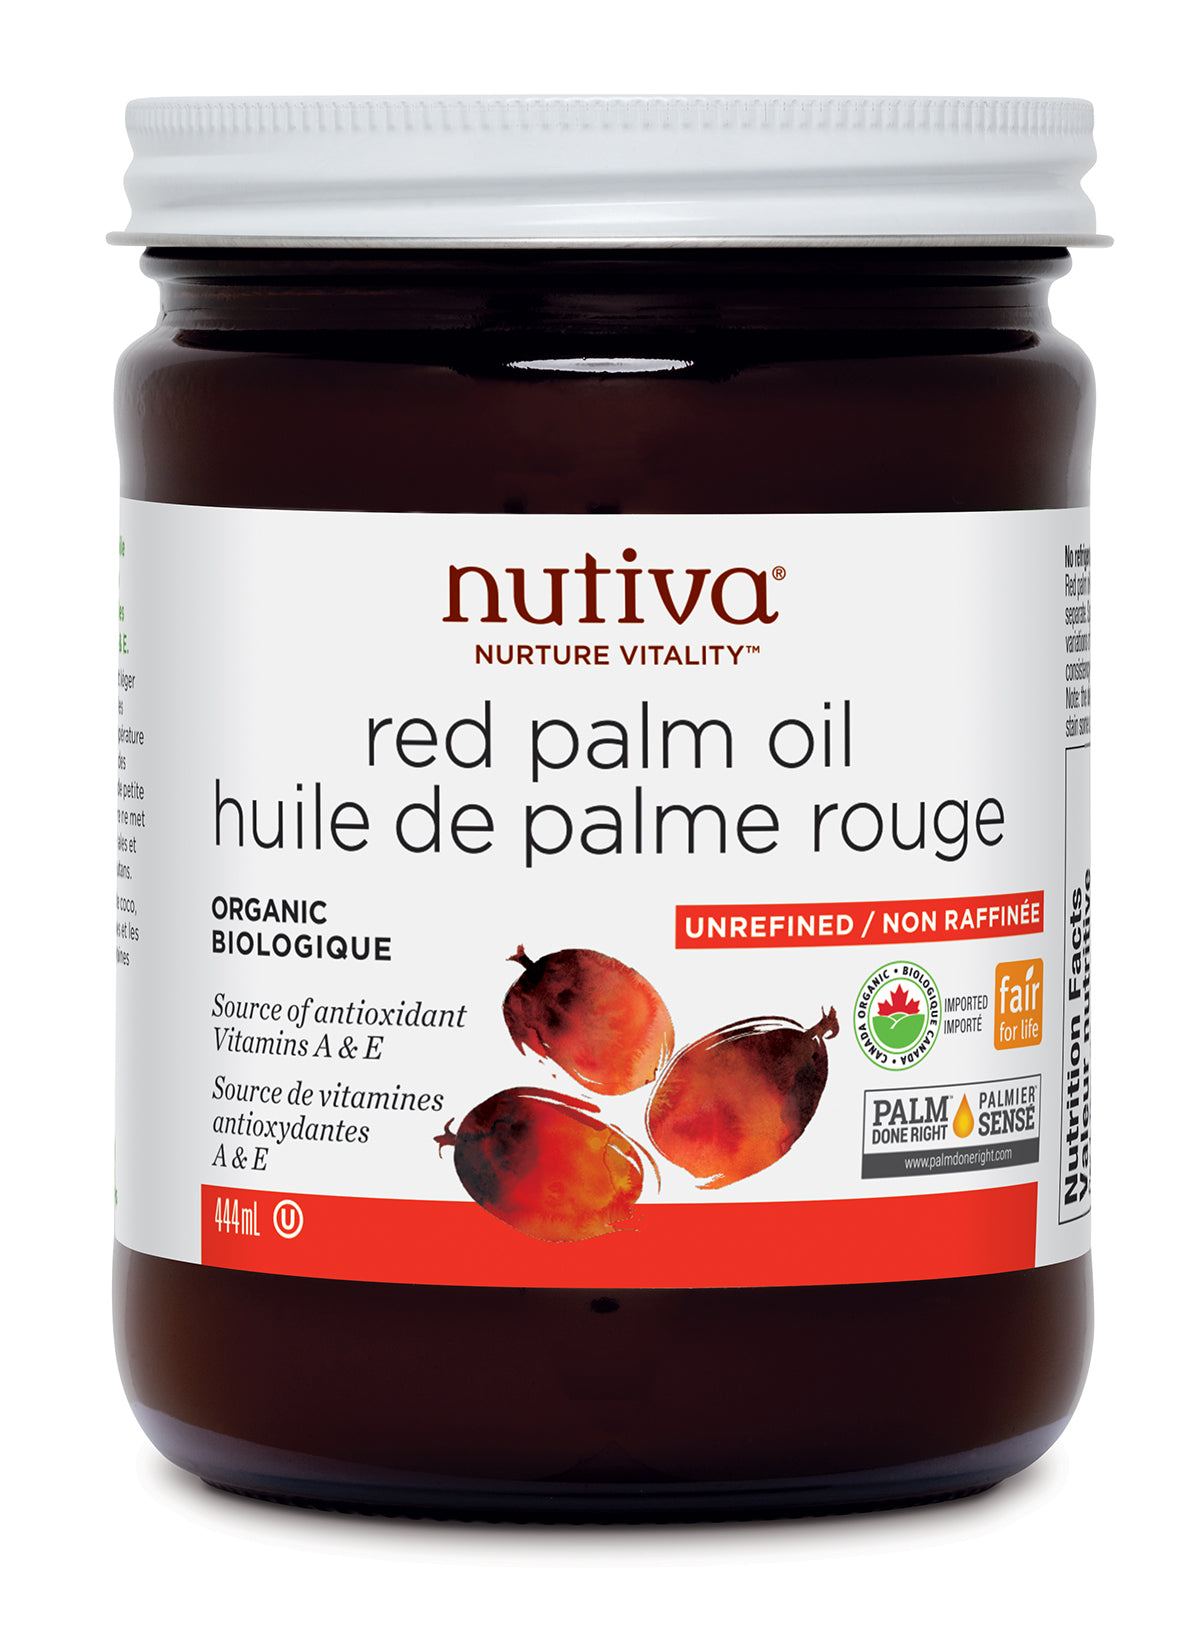 Nutiva Organic Red Palm Oil 444ml